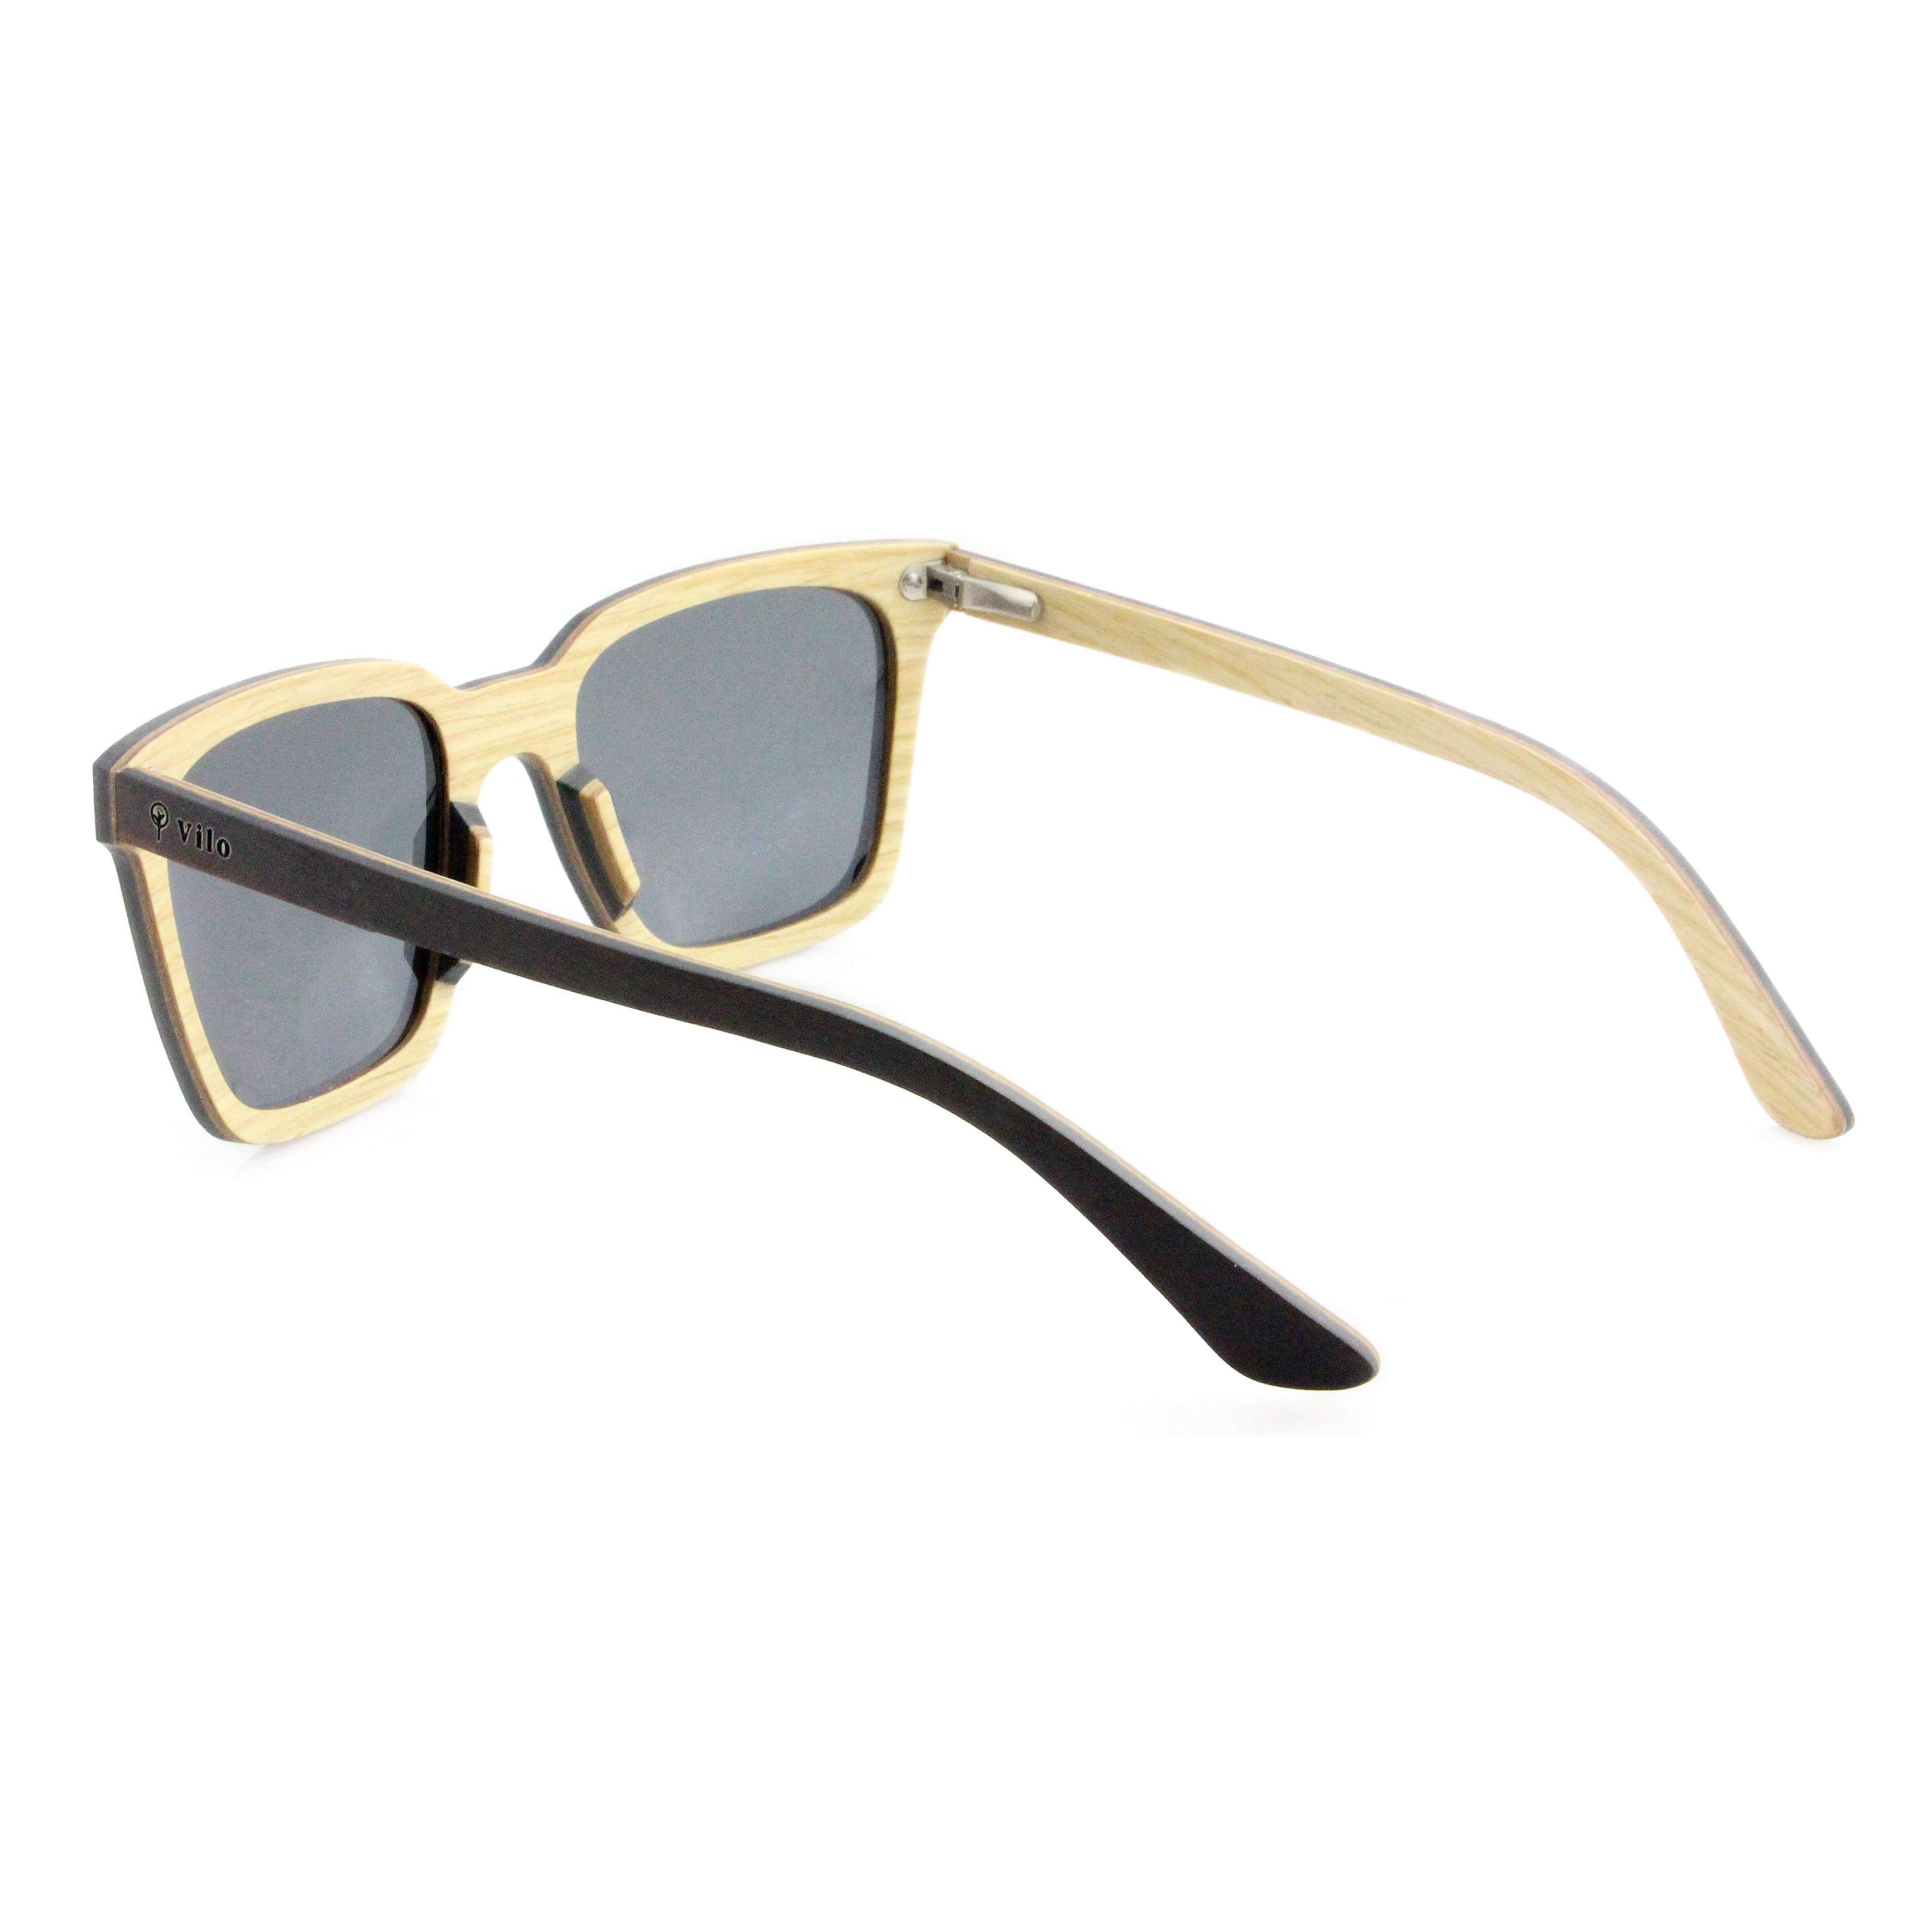 Vilo Wooden Sunglasses - Zephyr: